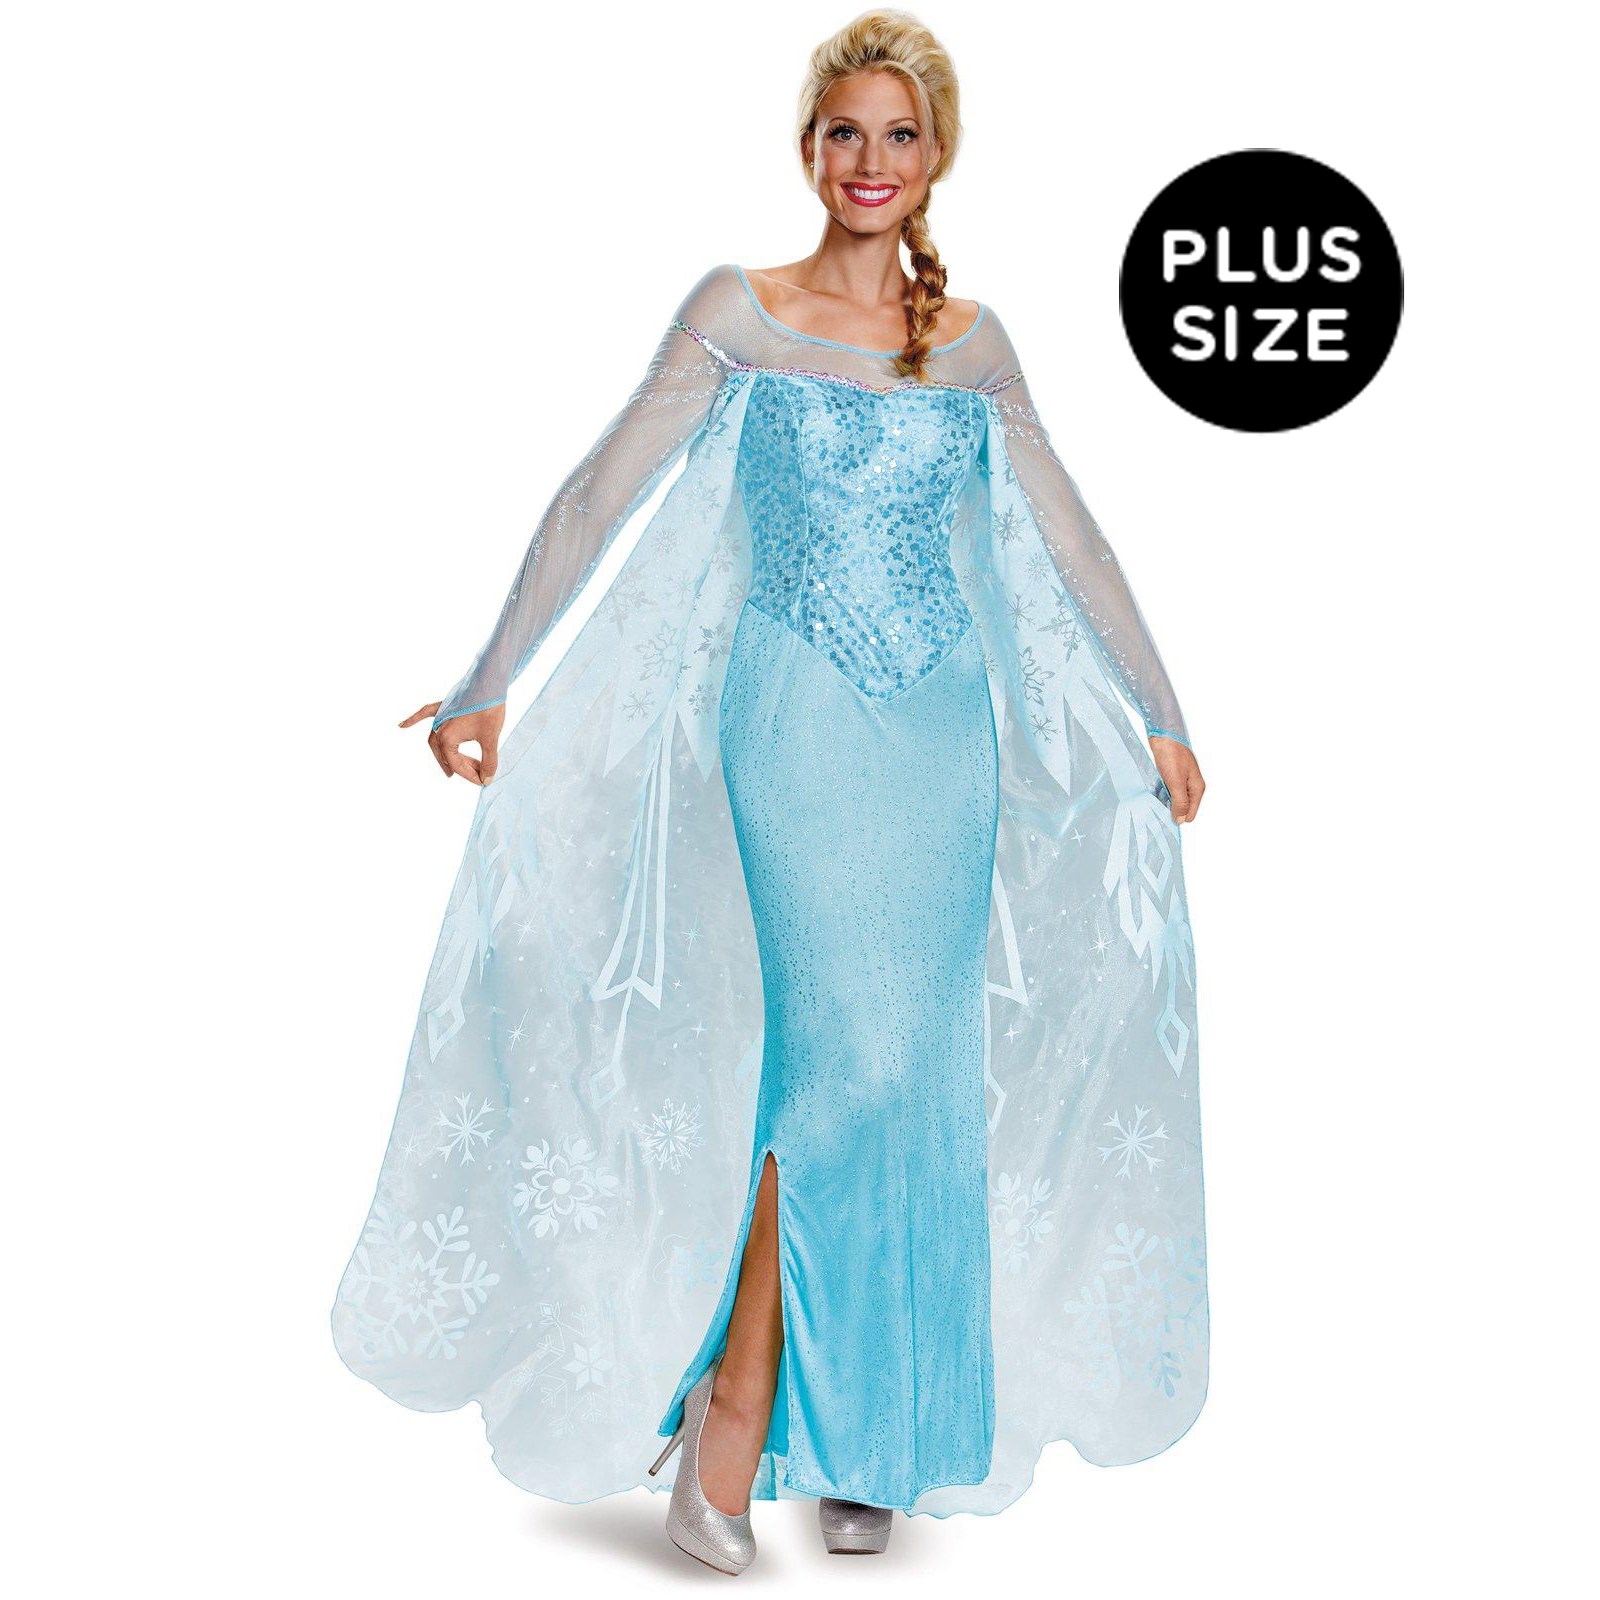 Frozen: Elsa Prestige Plus Size Costume For Women